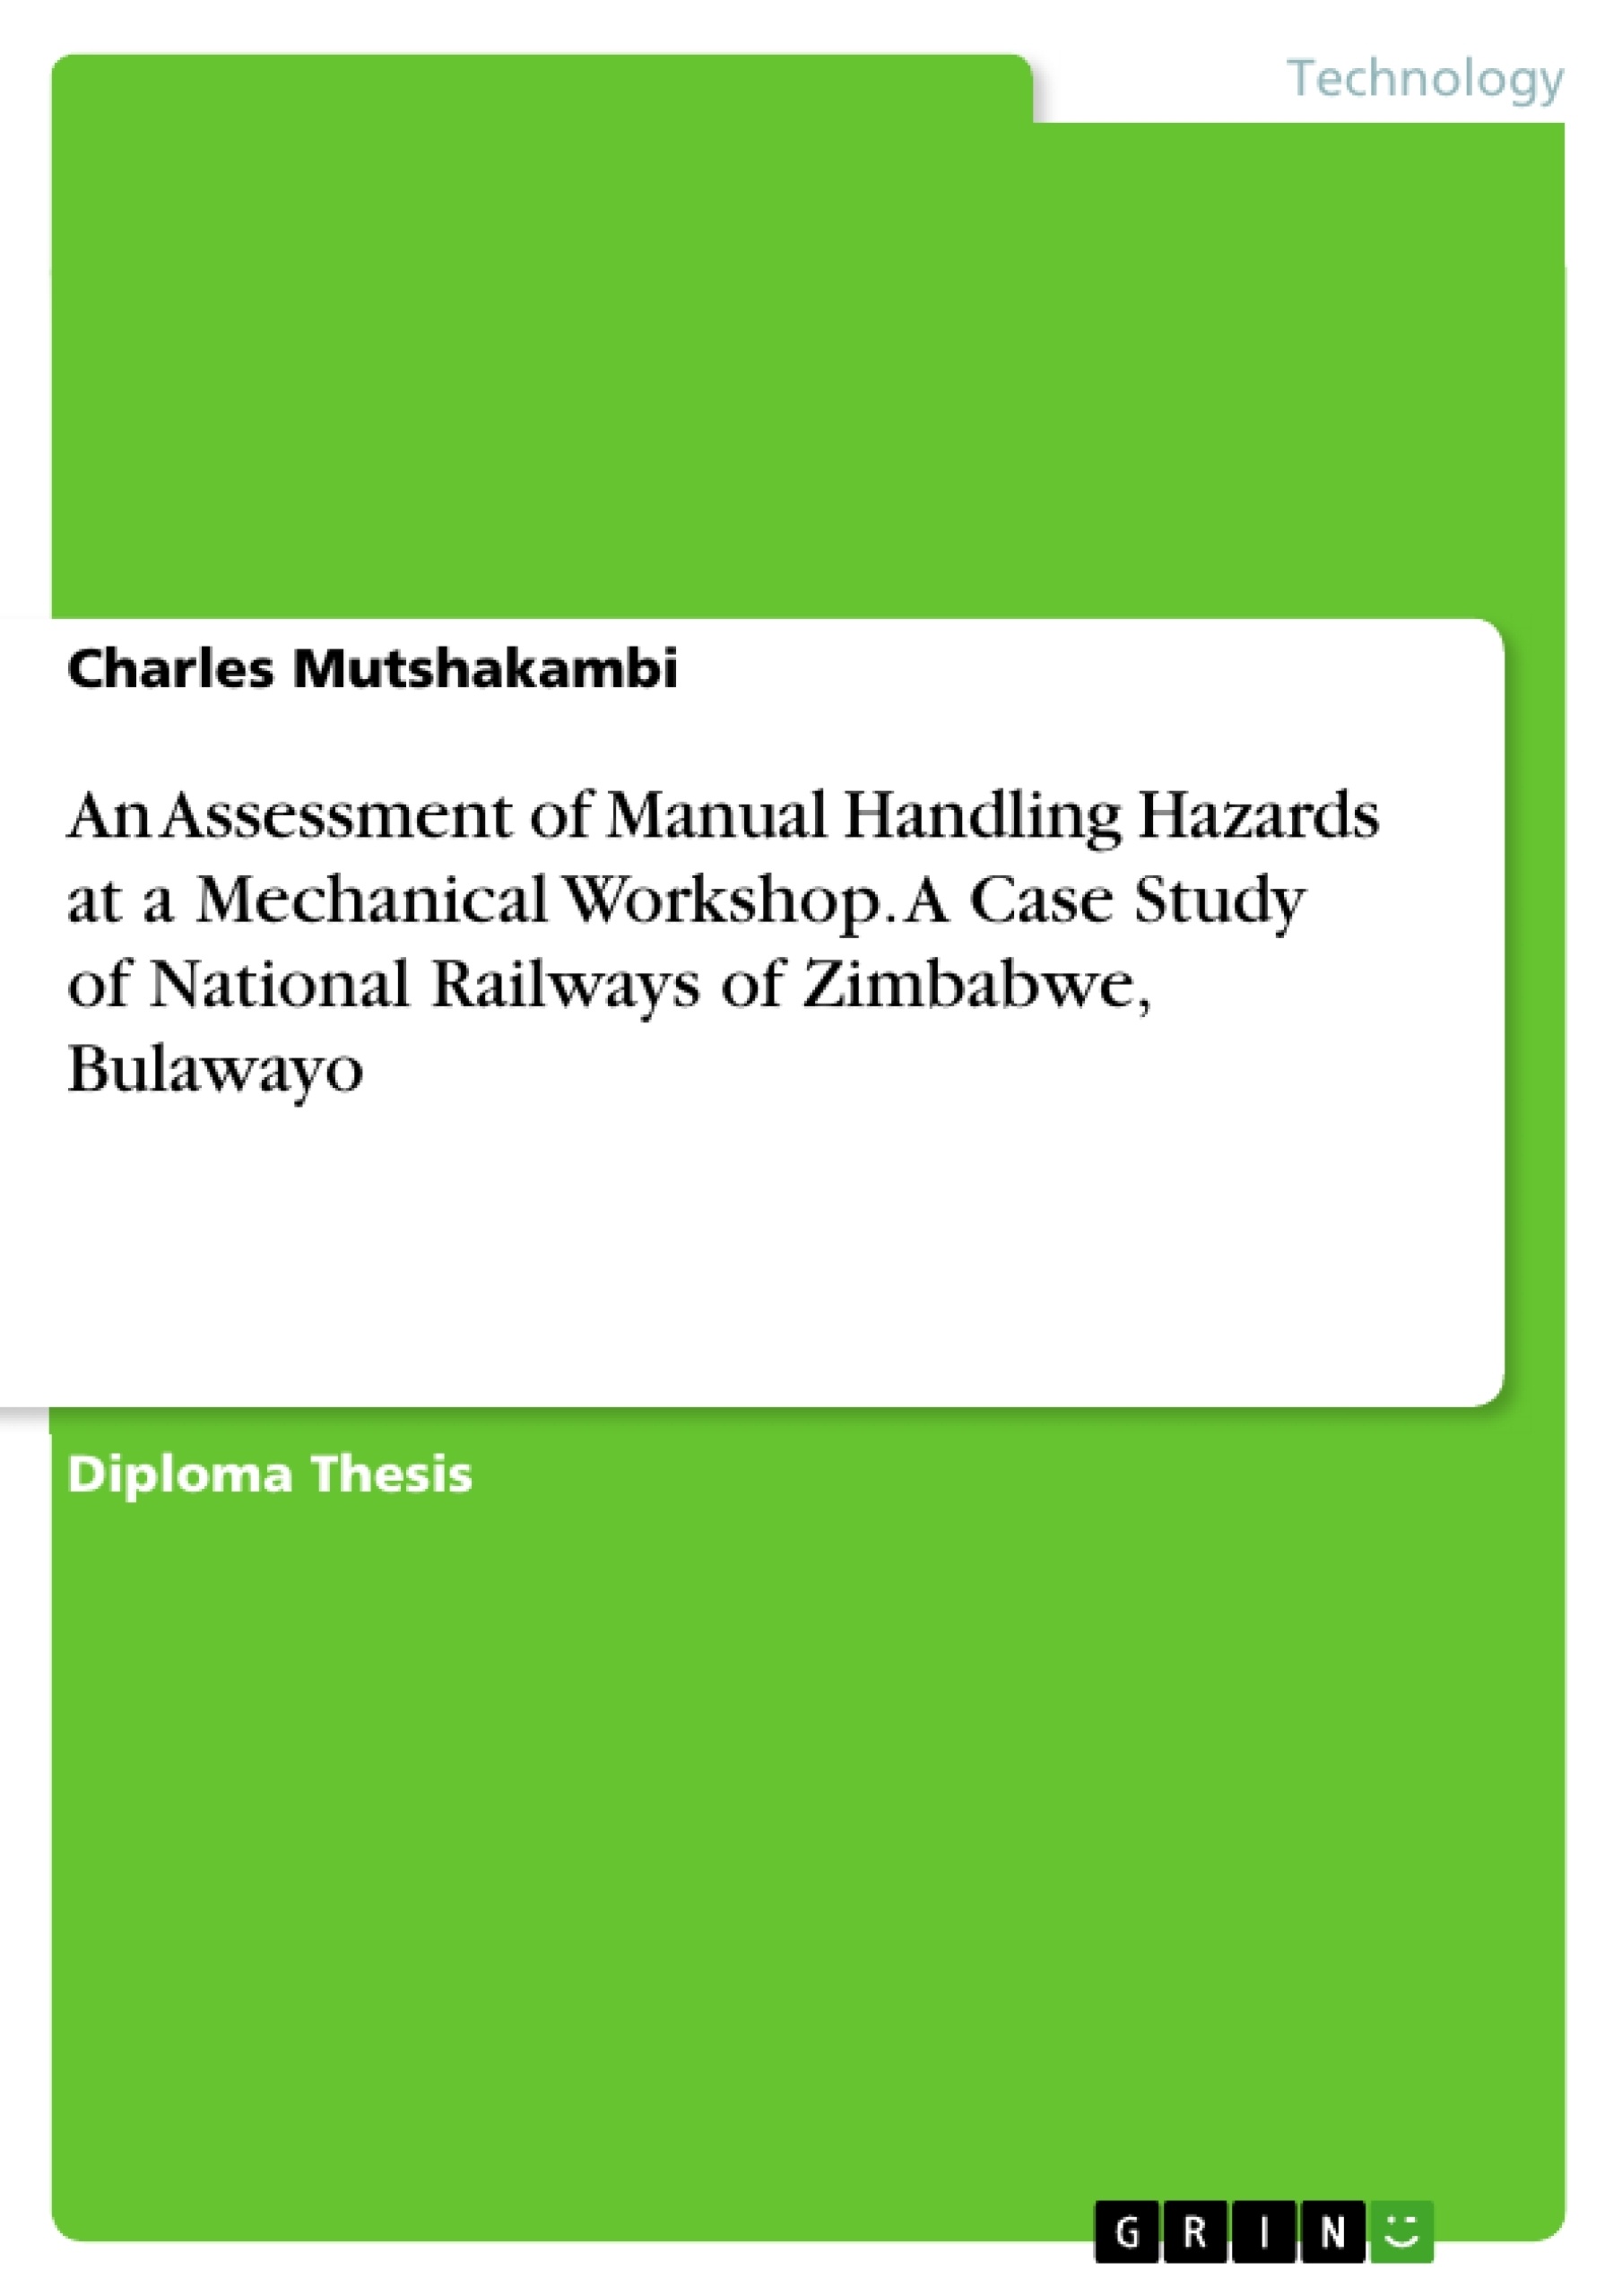 Title: An Assessment of Manual Handling Hazards at a Mechanical Workshop. A Case Study of National Railways of Zimbabwe, Bulawayo